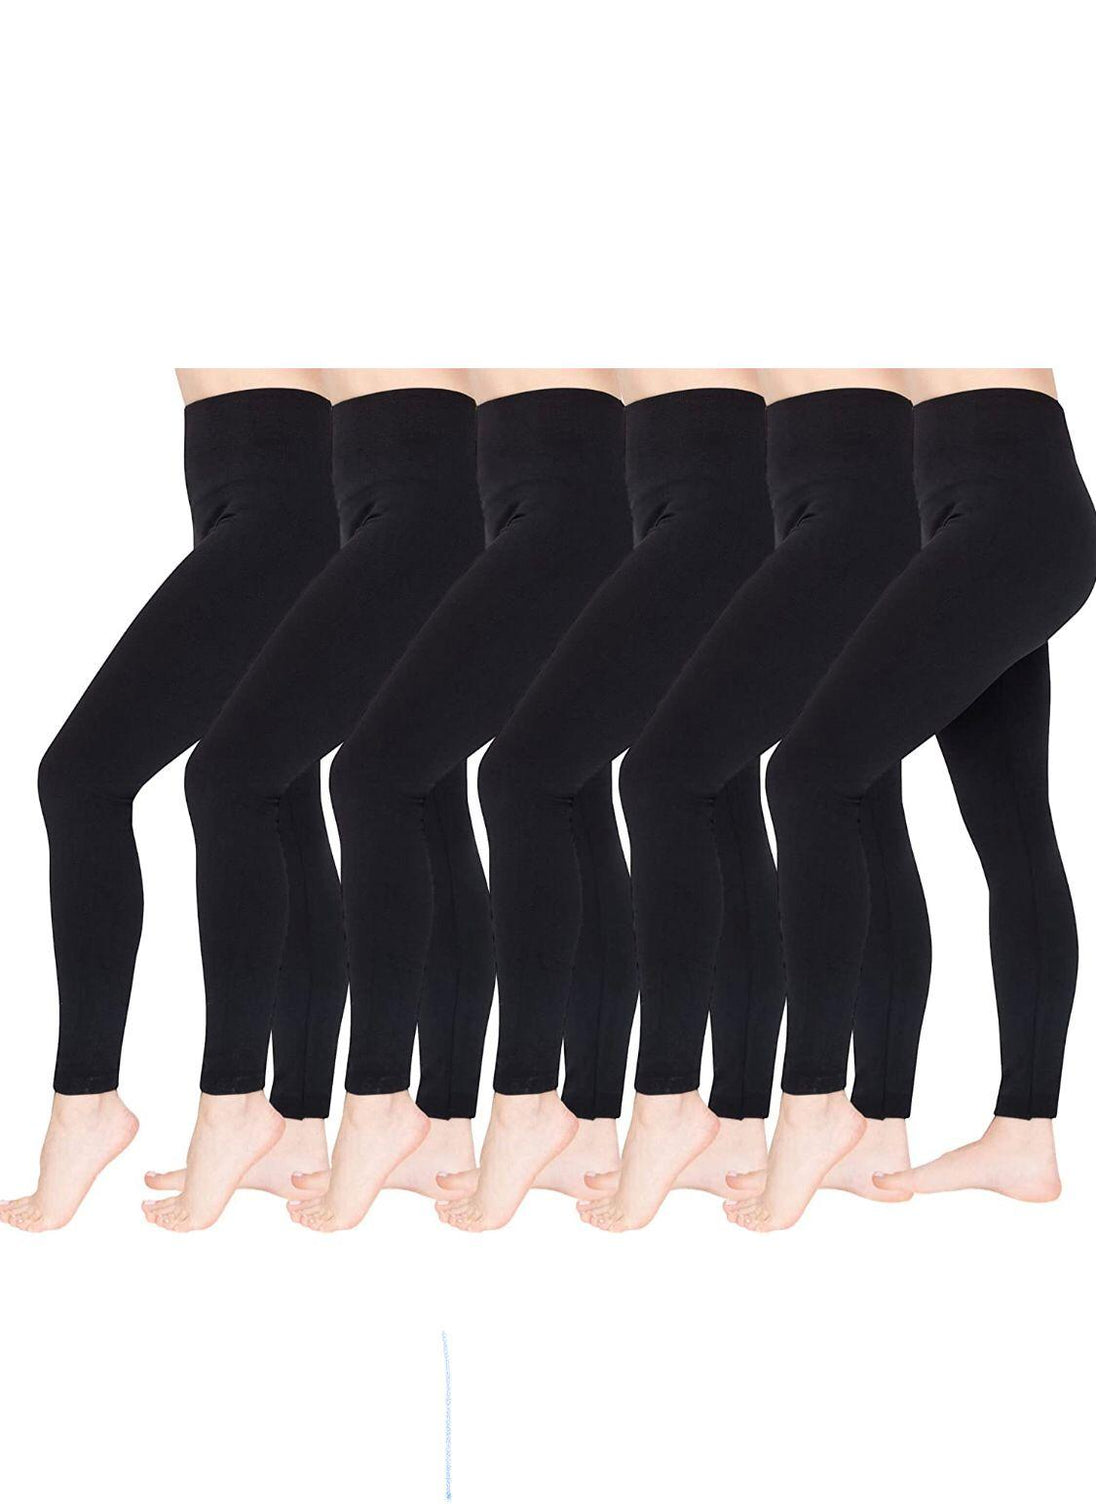 Very Black Cozy Fleece-Lined Leggings